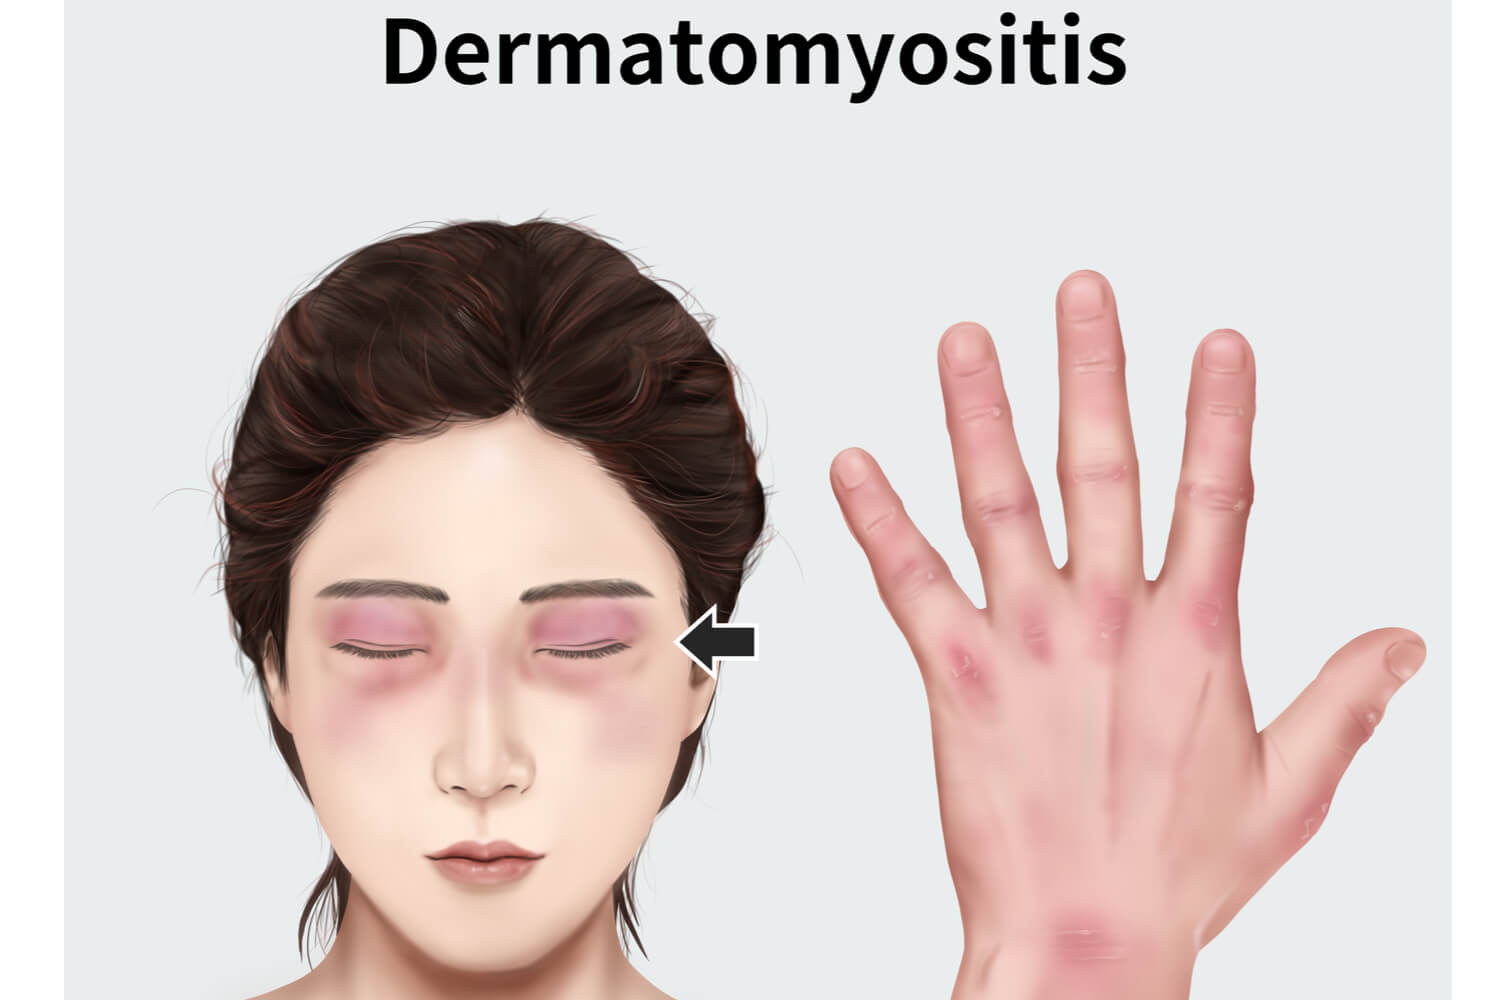 cause of Dermatomyositis